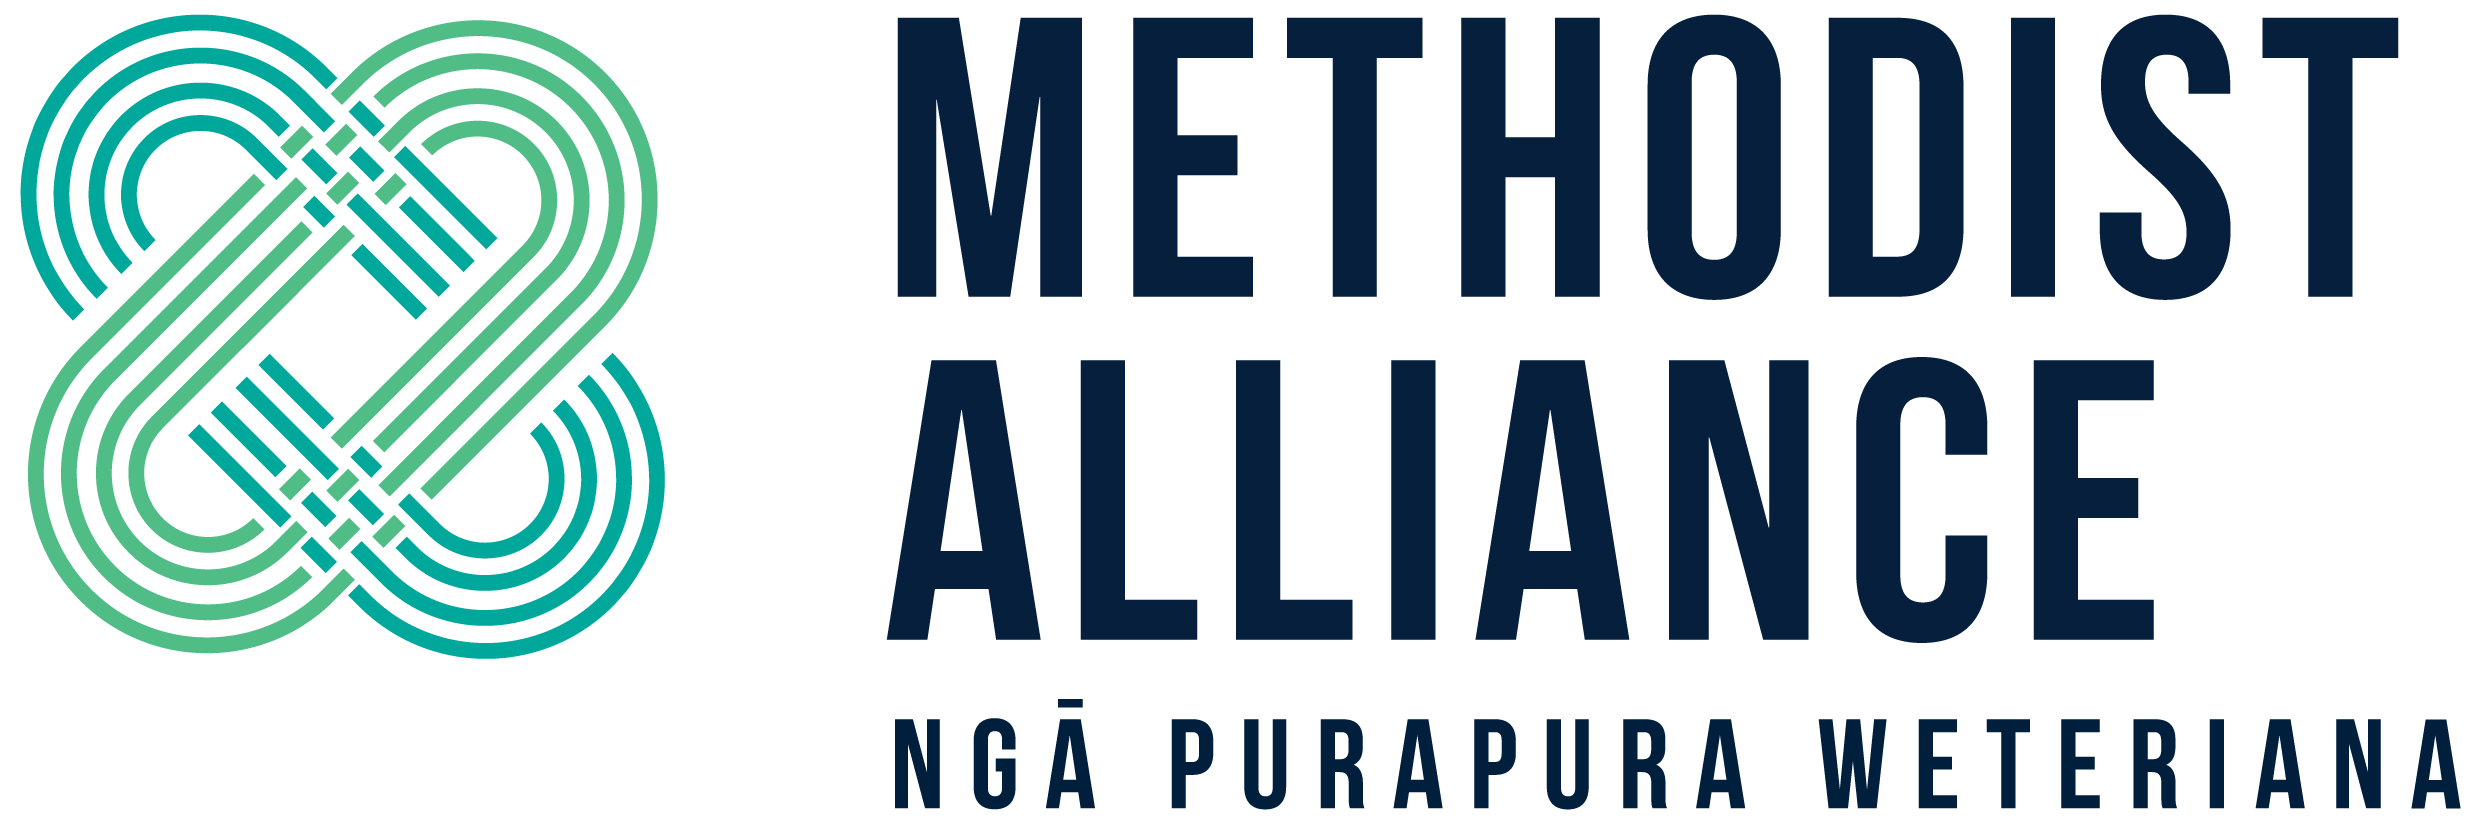 Methodist Alliance